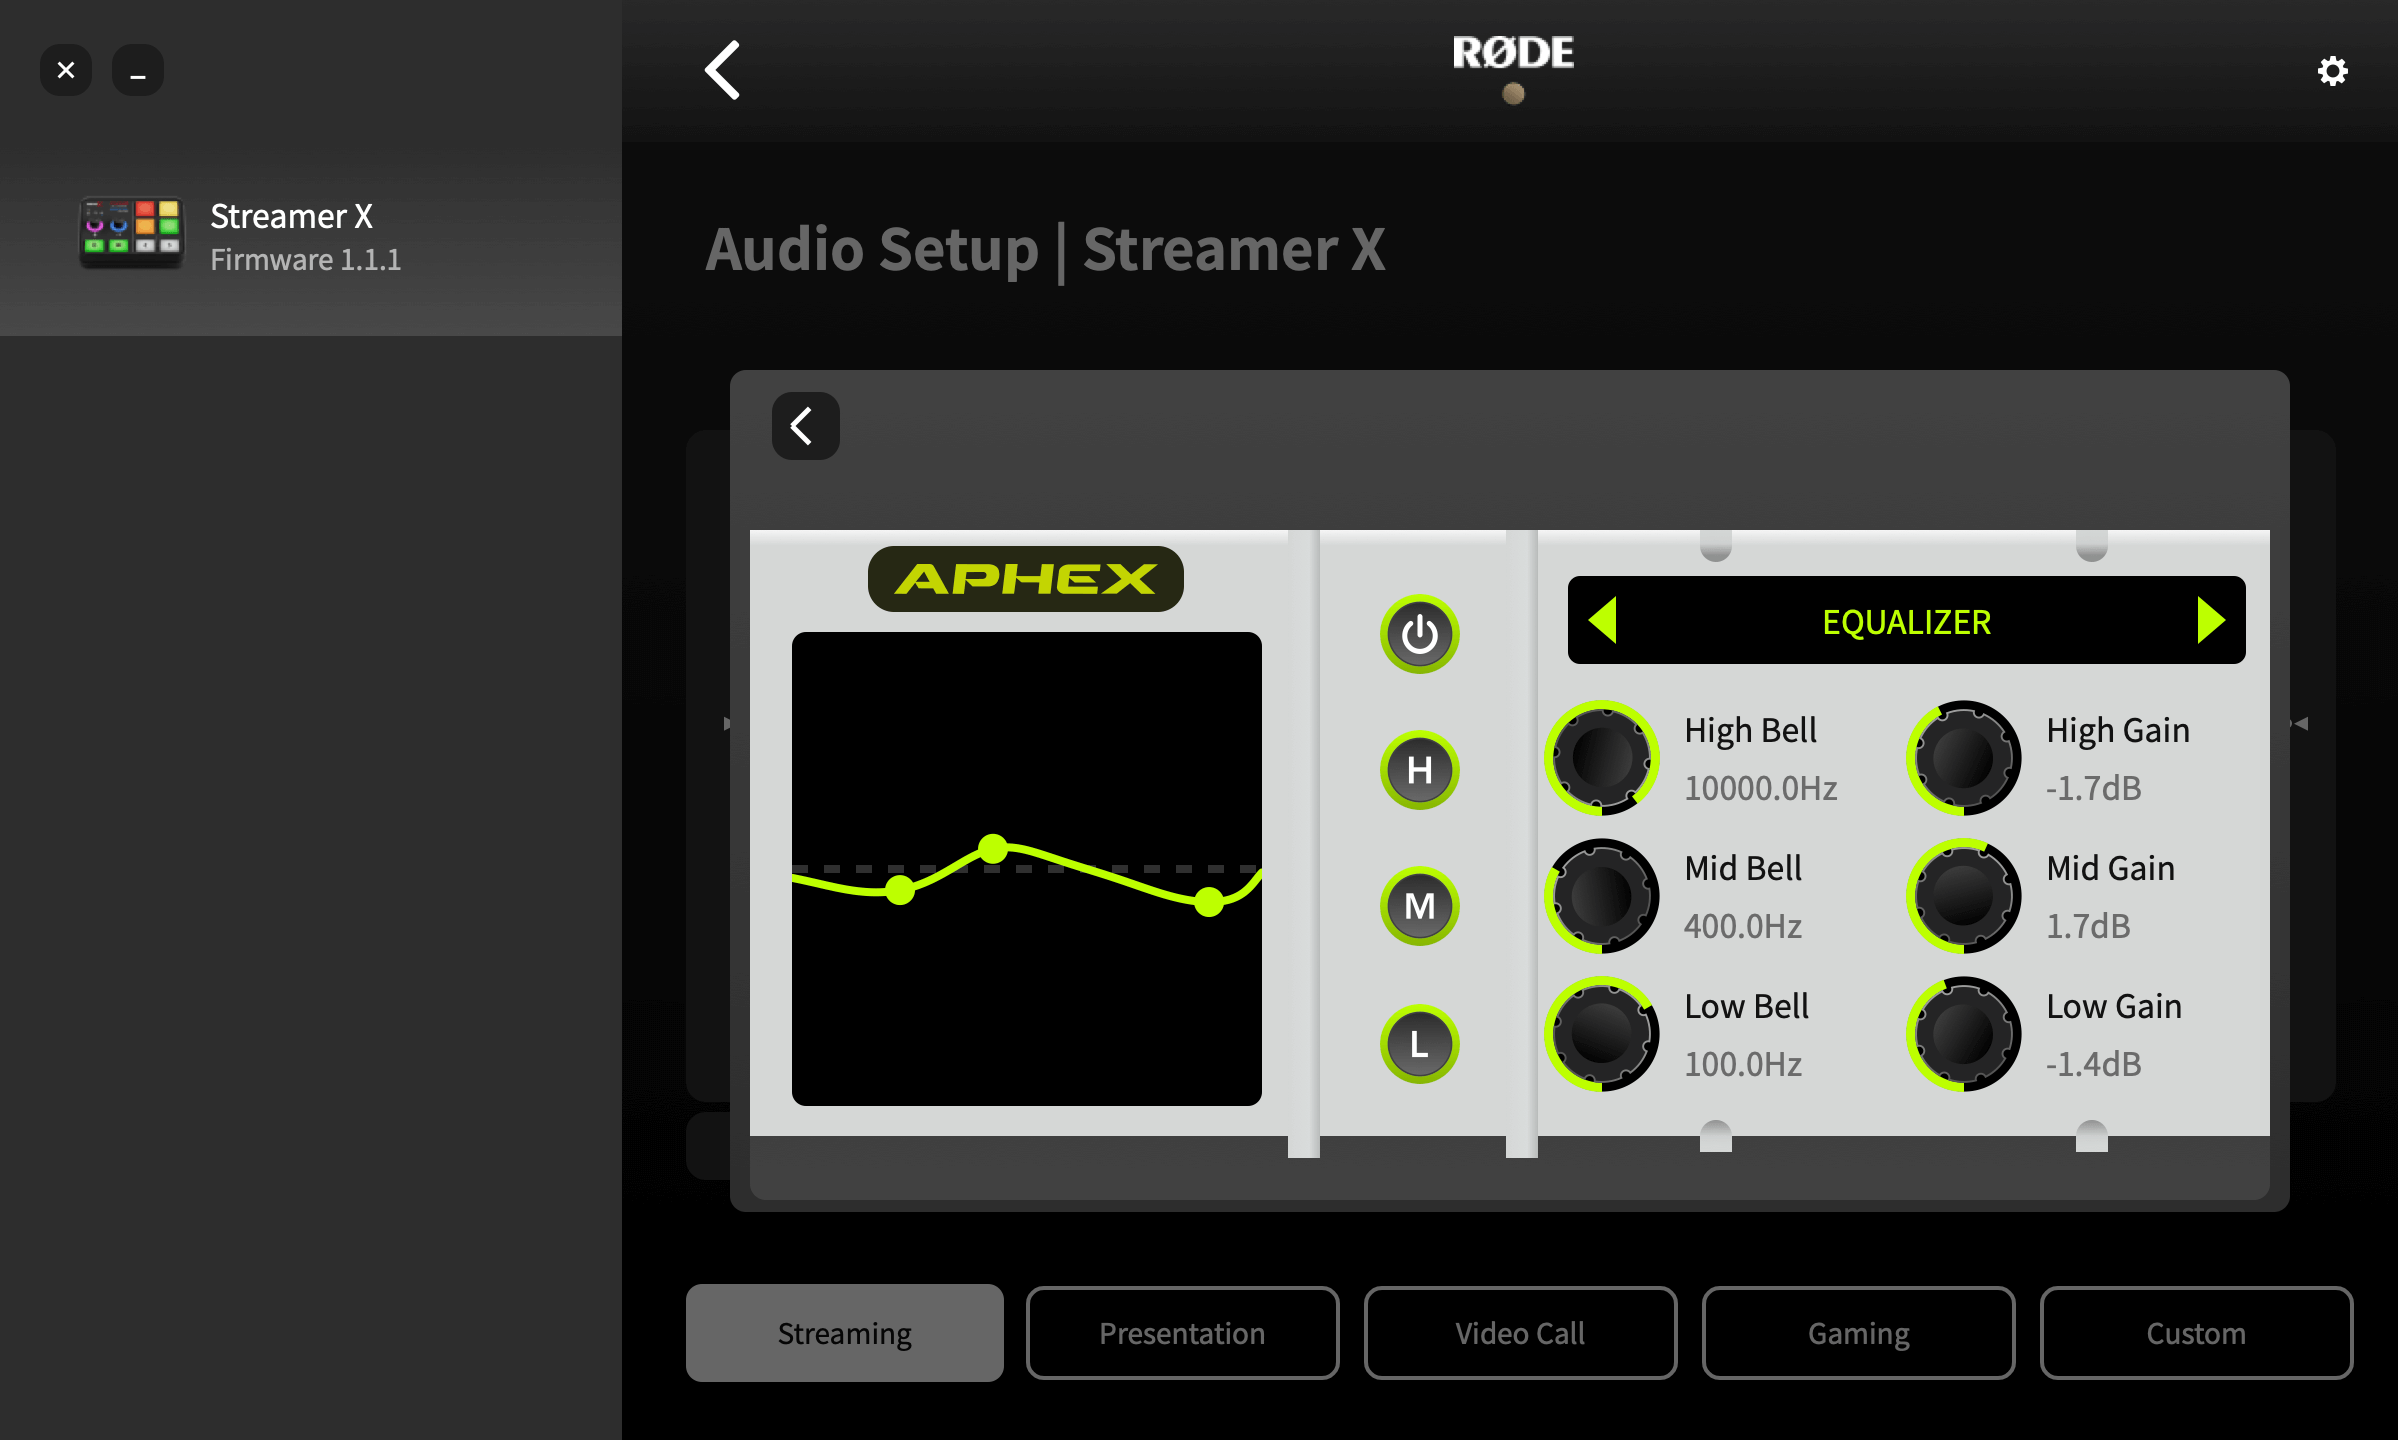 RØDE Central showing Streamer X EQ settings